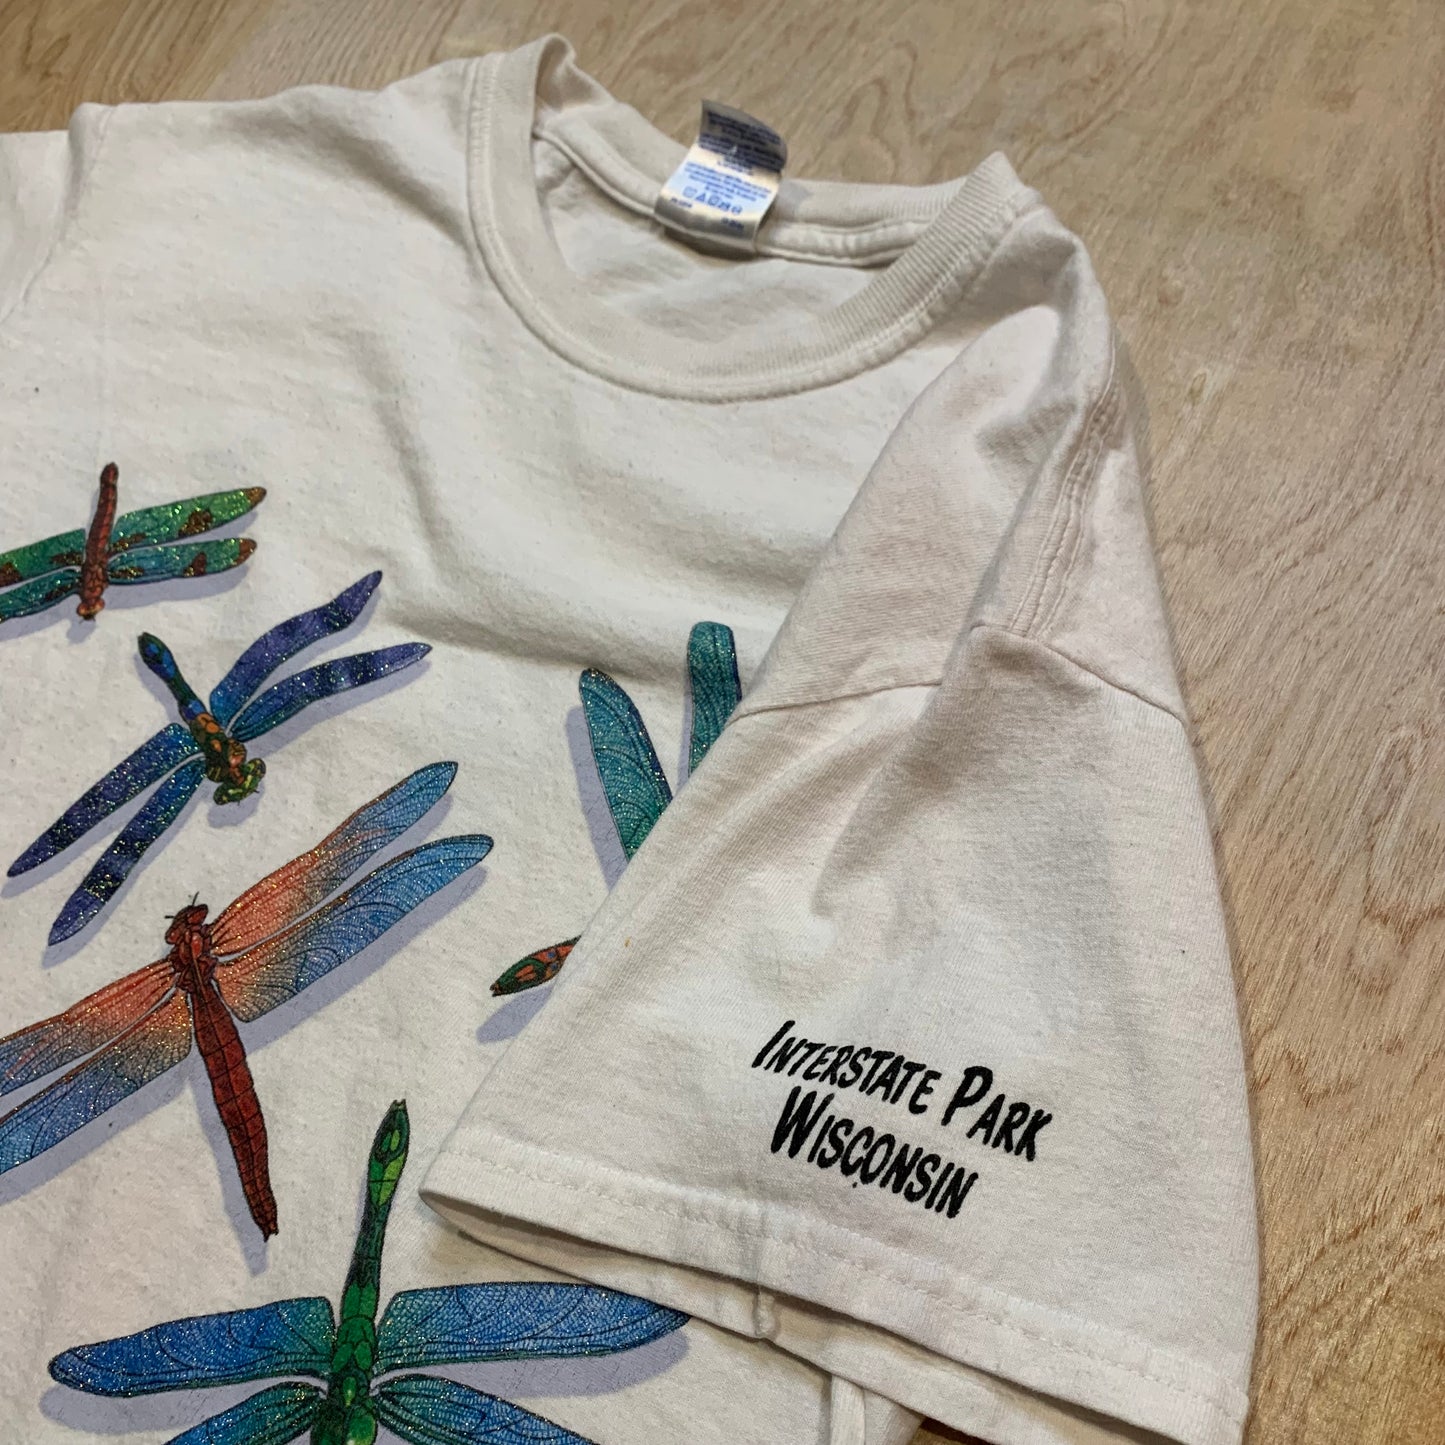 2002 Wisconsin Interstate Park Dragonfly T-Shirt